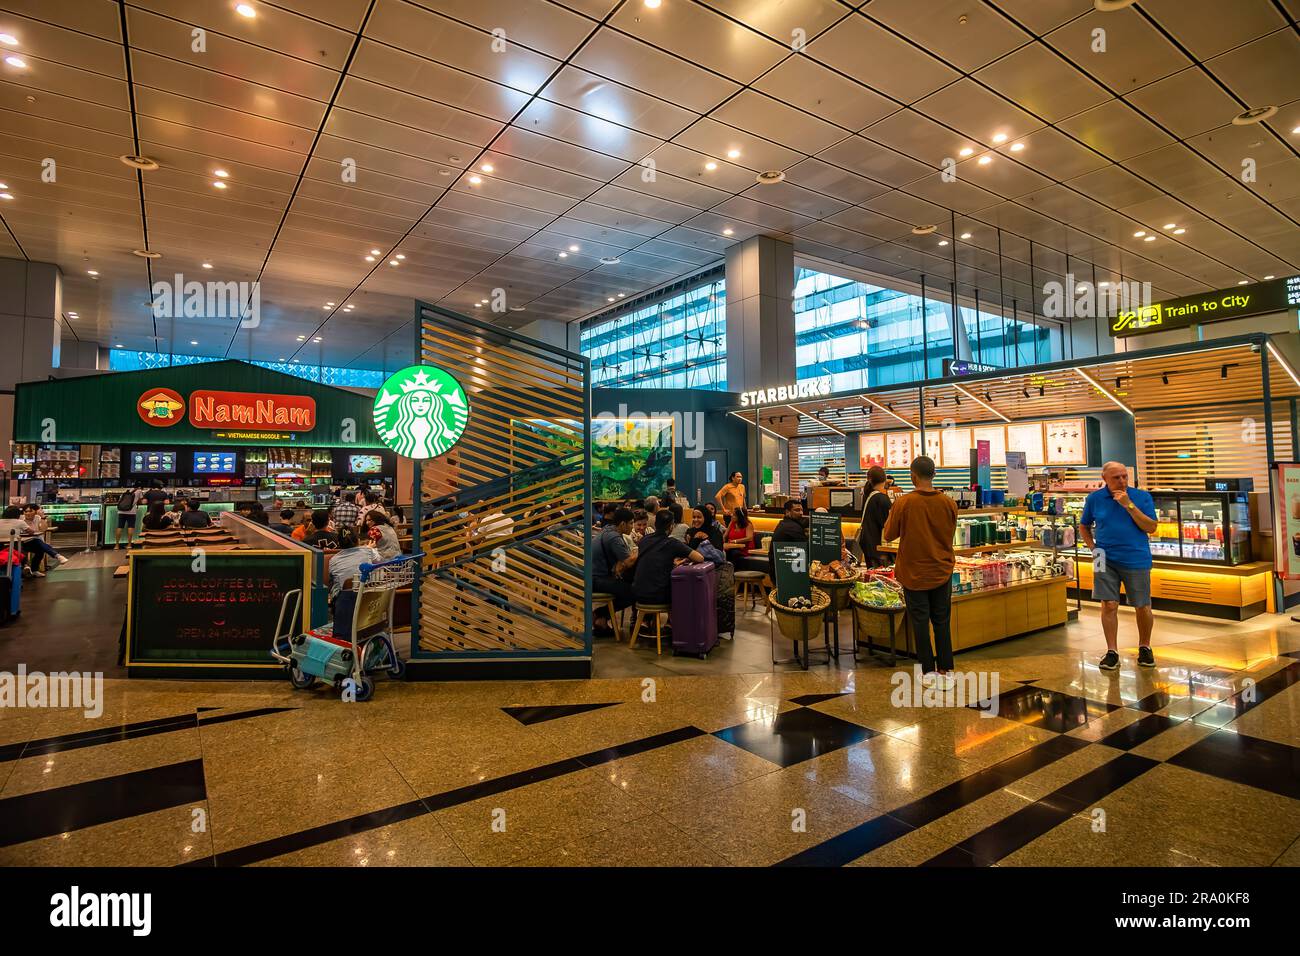 Starbucks at Terminal 3 in Changi Airport, Singapore. Stock Photo